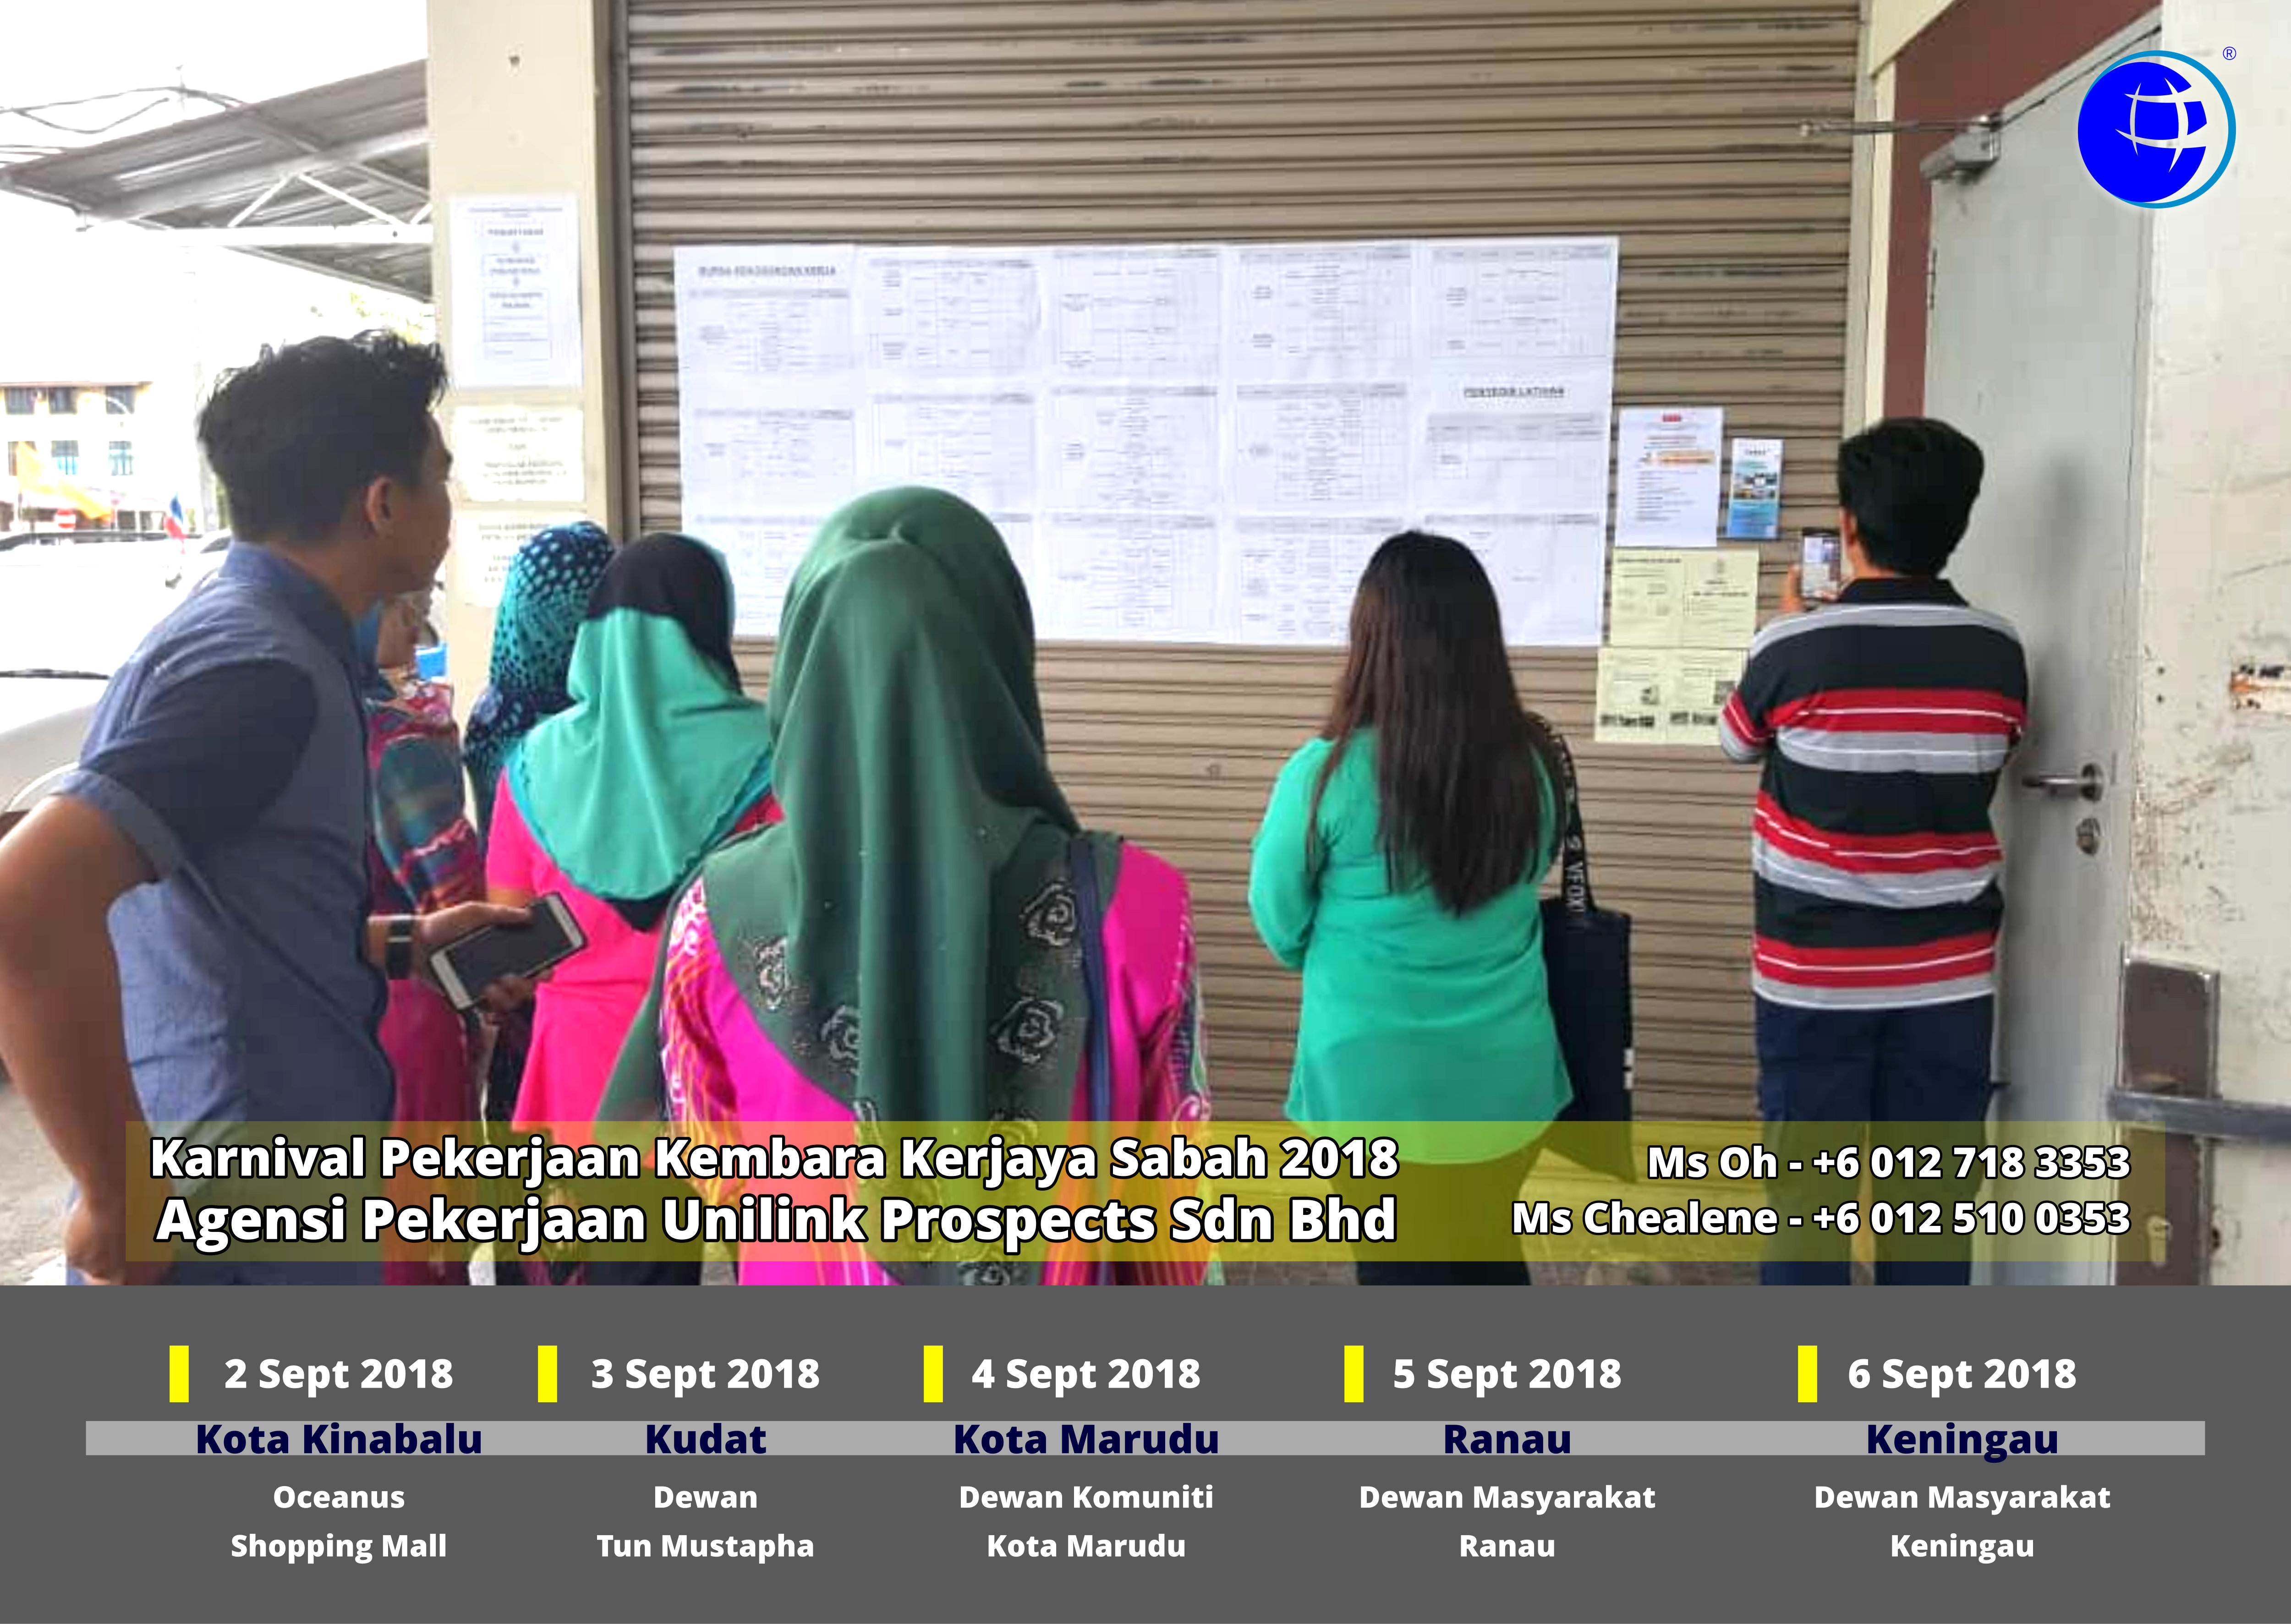 Malaysia Karnival Pekerjaan Kembara Kerjaya Sabah 2018 Agensi Pekerjaan Unilink Prospects Sdn Bhd 专业合法人力资源介绍所 A04